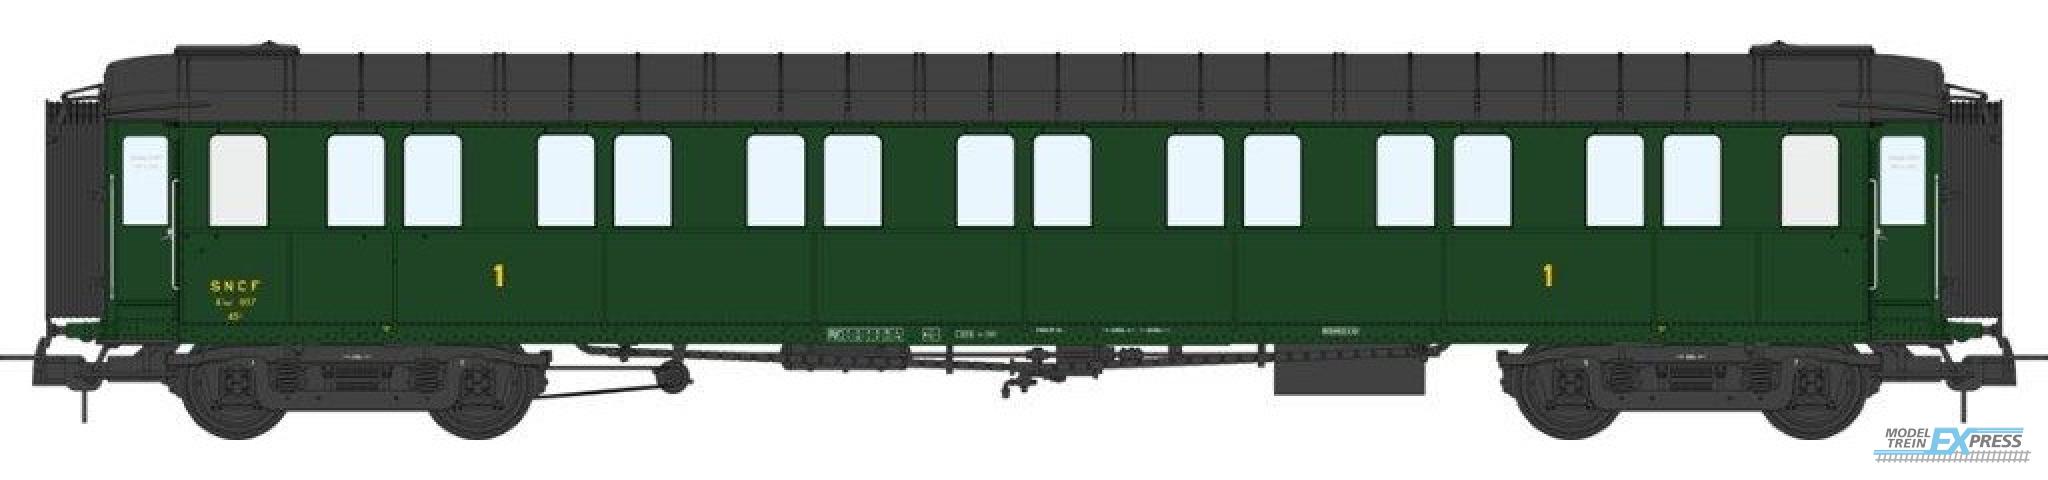 REE models VB-425 Metallic Cars Ex-PLM, A7 N° 607, green 306, SNCF Era III A